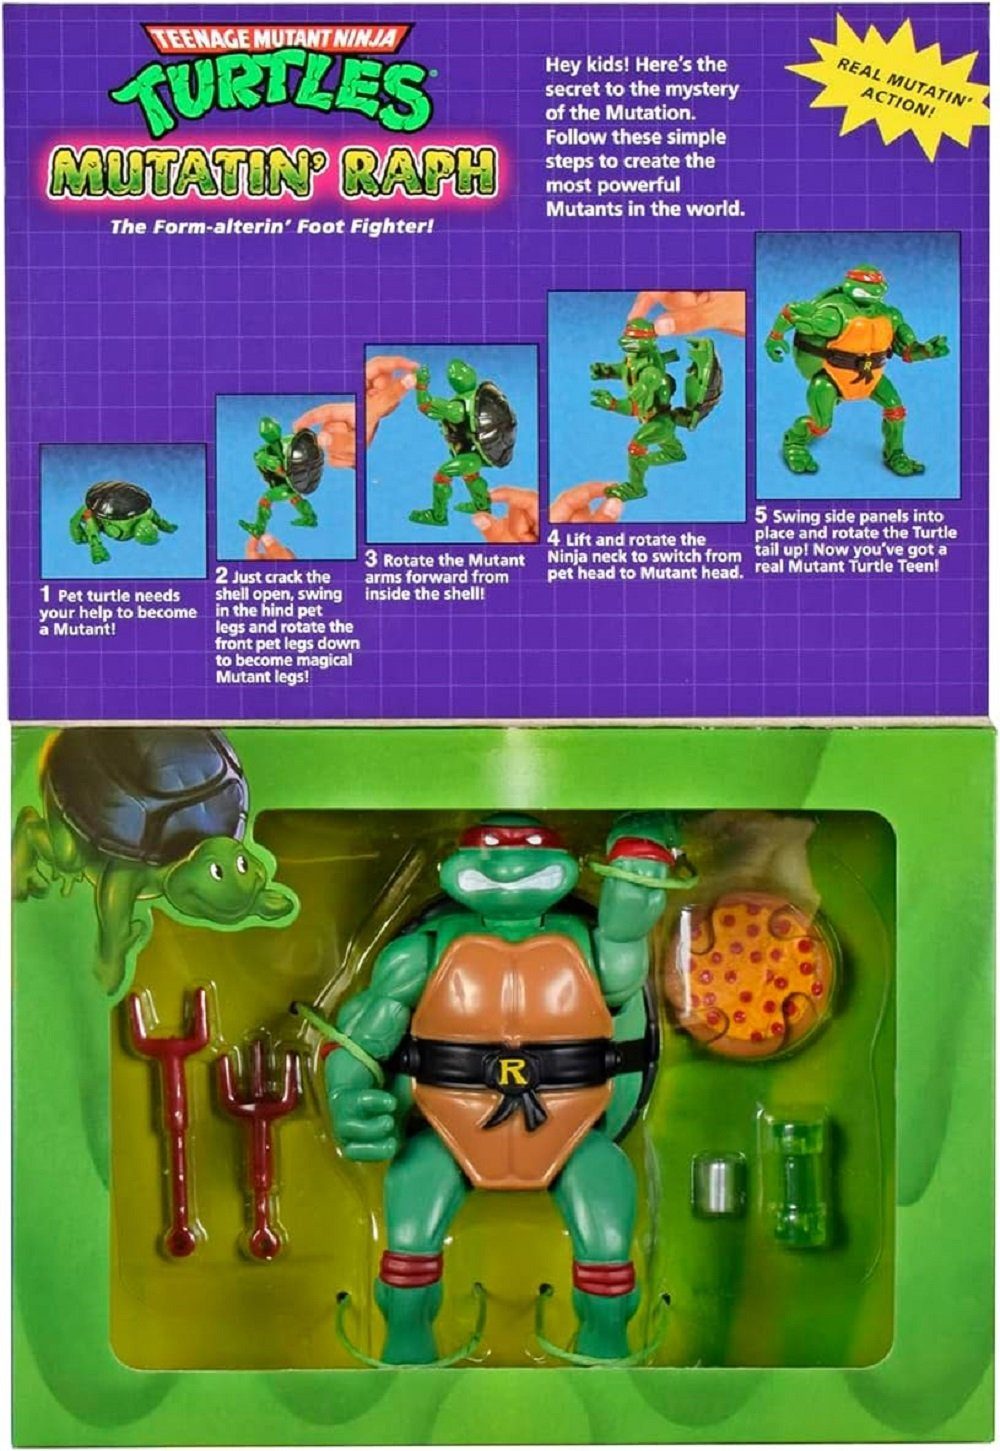 https://i.otto.de/i/otto/8ca52f2c-0efe-412e-af42-32e7882dfc25/playmates-toys-actionfigur-teenage-mutant-ninja-turtles-mutatin-raph-leo.jpg?$formatz$